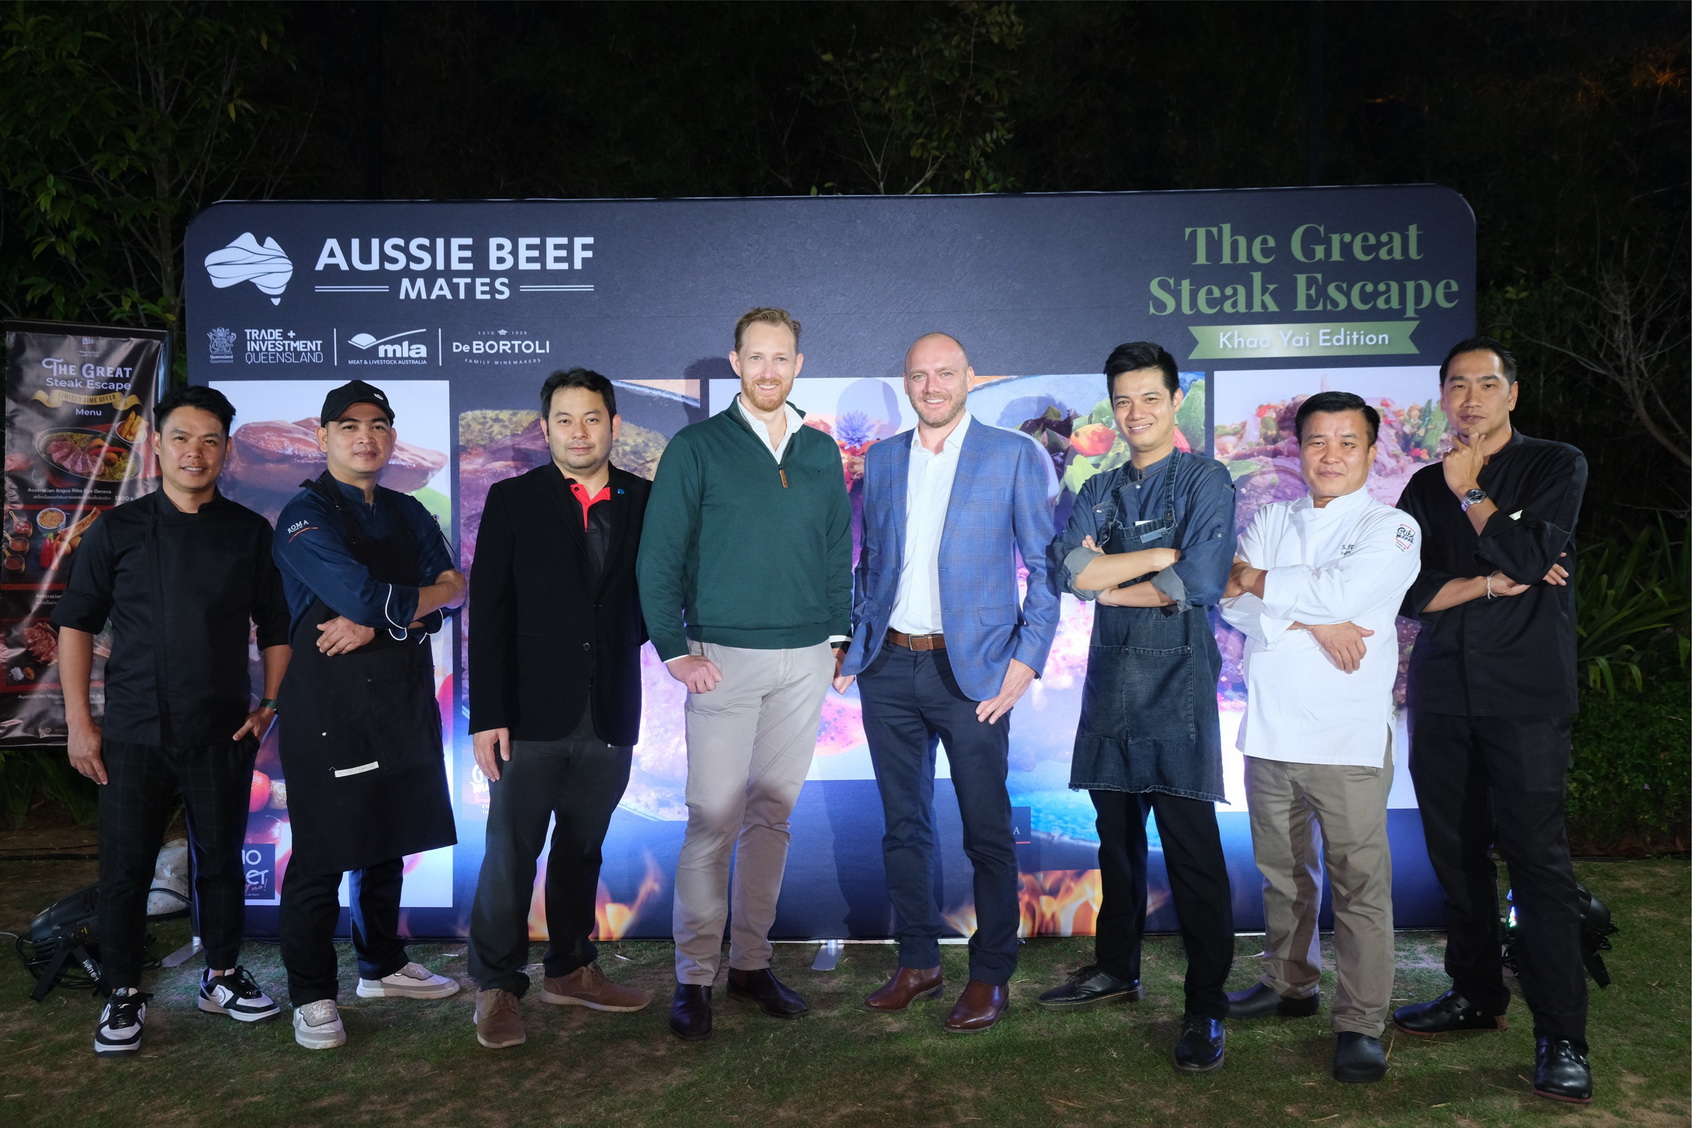 MLA จัดกิจกรรม The Great Steak Escape II KHAO YAI EDITION ตอกย้ำความเป็นเลิศของเนื้อวัวระดับพรีเมียมจากออสเตรเลียที่มีความหลากหลาย ปรุงได้หลากเมนู รังสรรค์เป็นมื้อพิเศษโดยร้านอาหารชั้นนำ 5 แห่ง